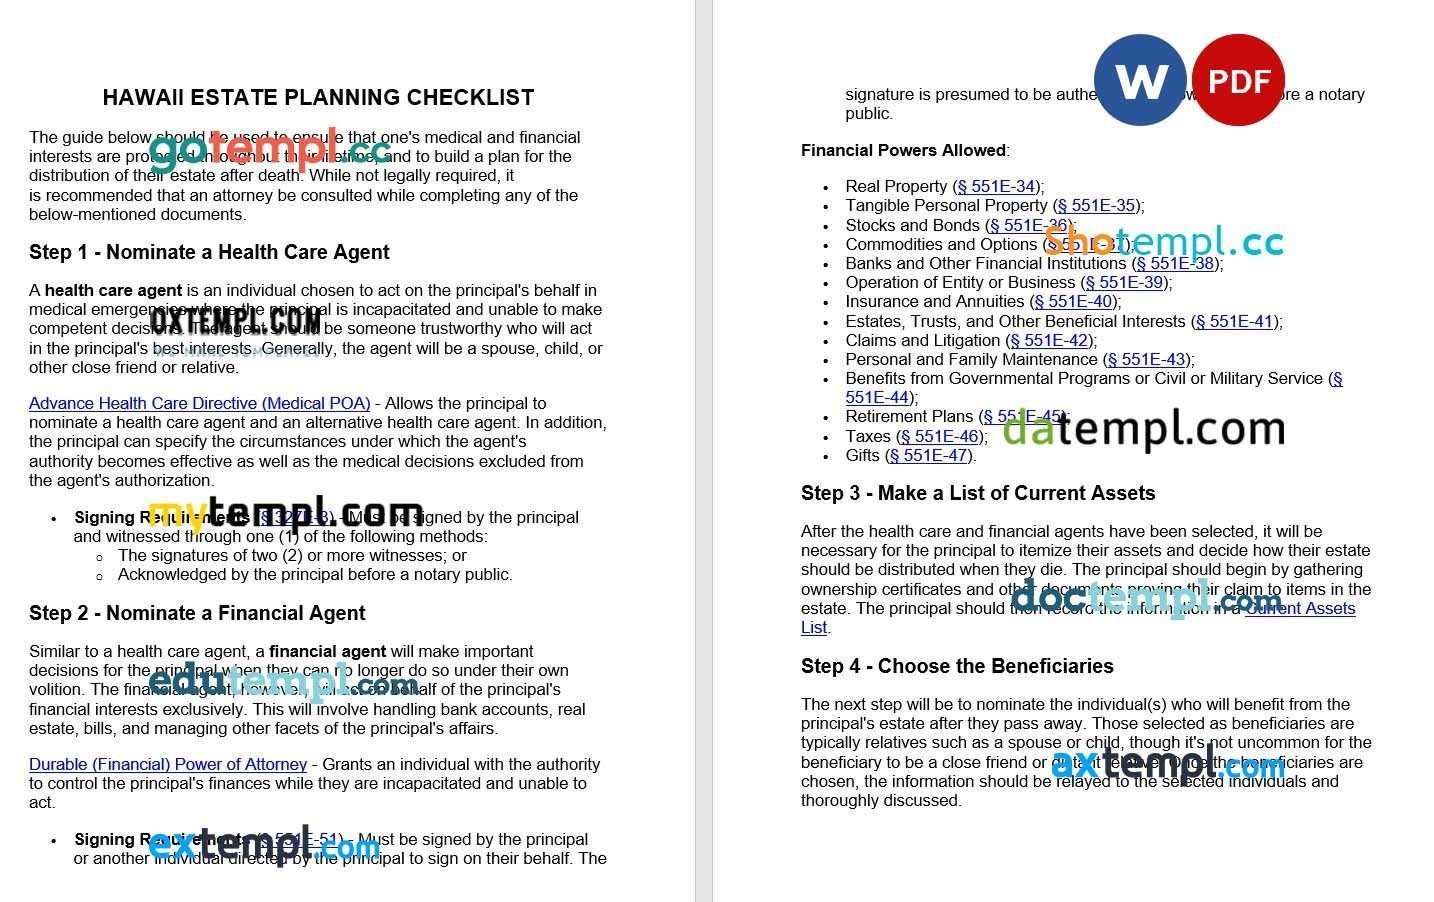 Hawaii Estate Planning Checklist example, fully editable